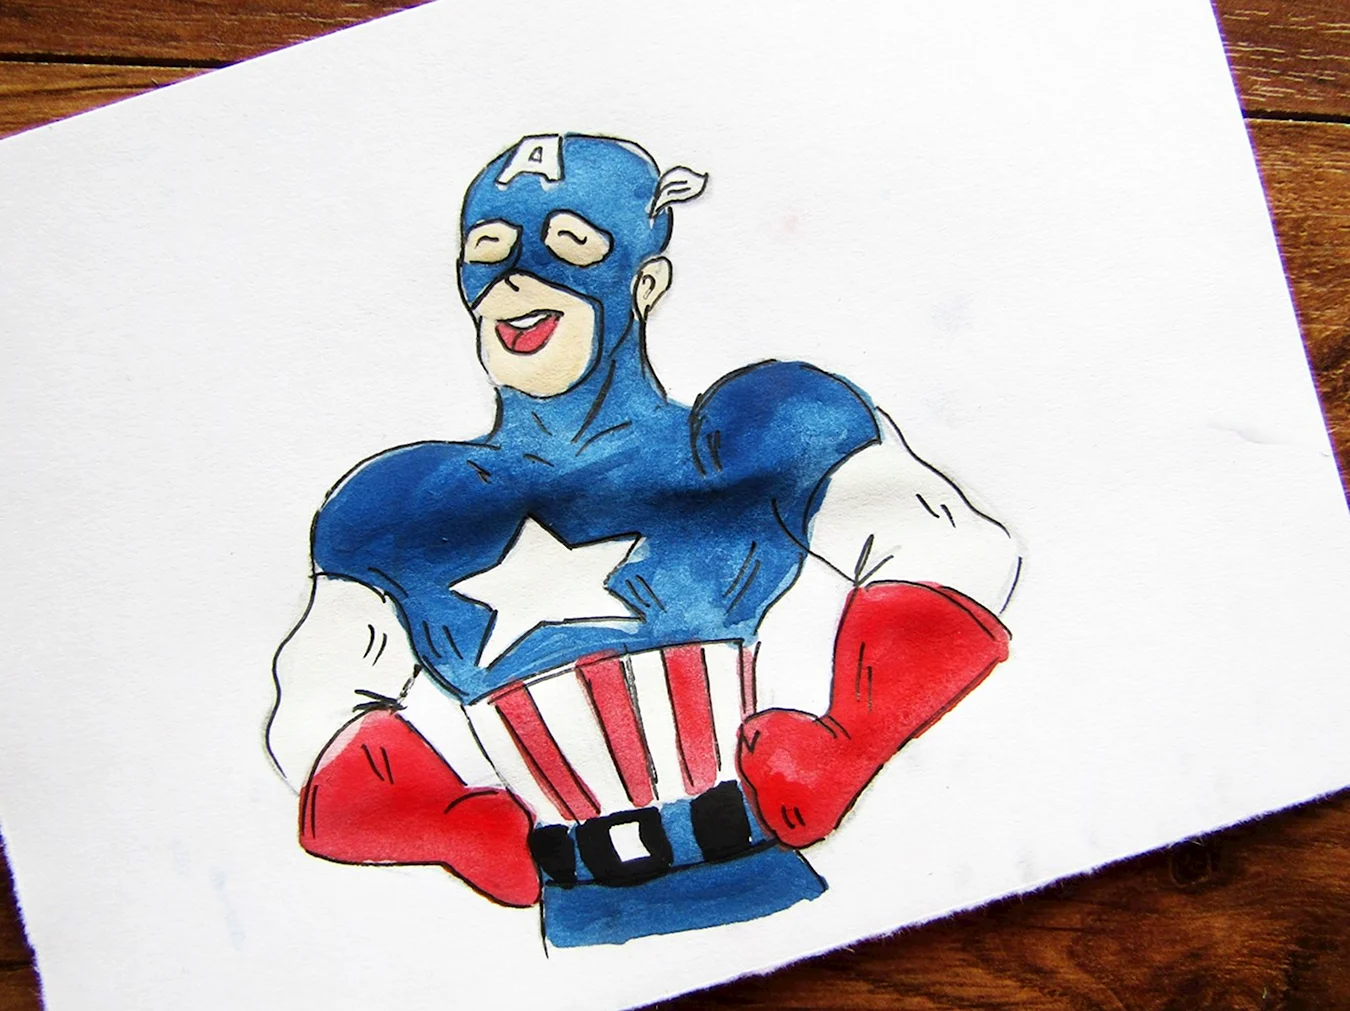 Капитан Америка рисунок. Для срисовки